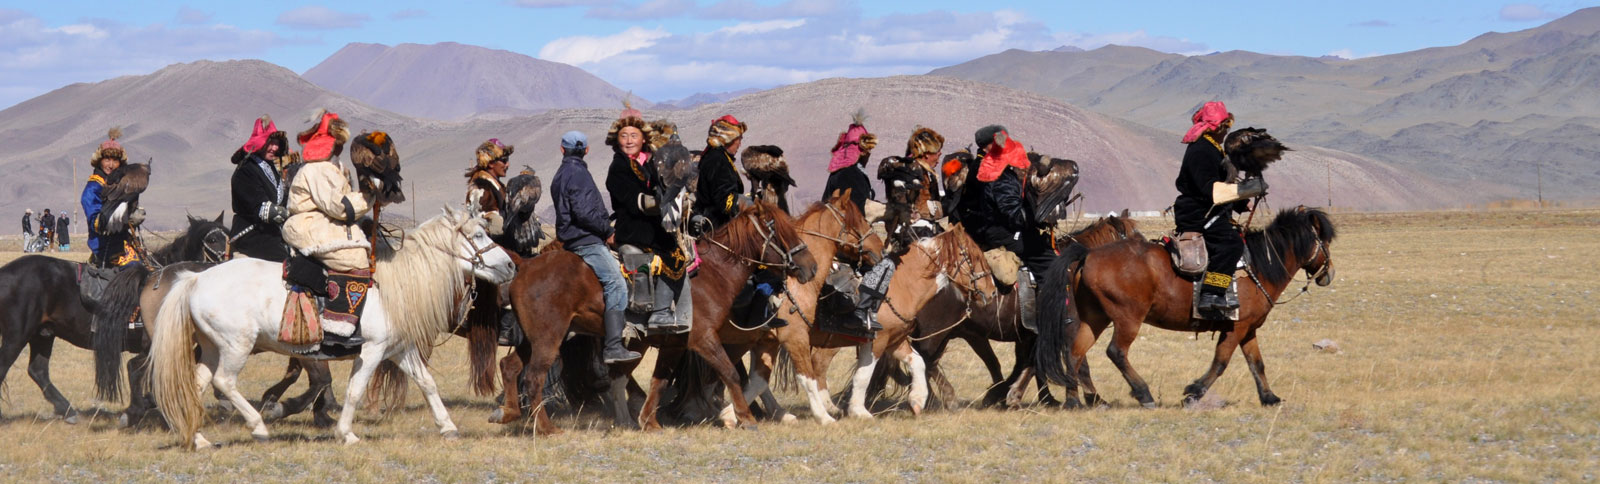 Equestrian Tourism in Mongolia